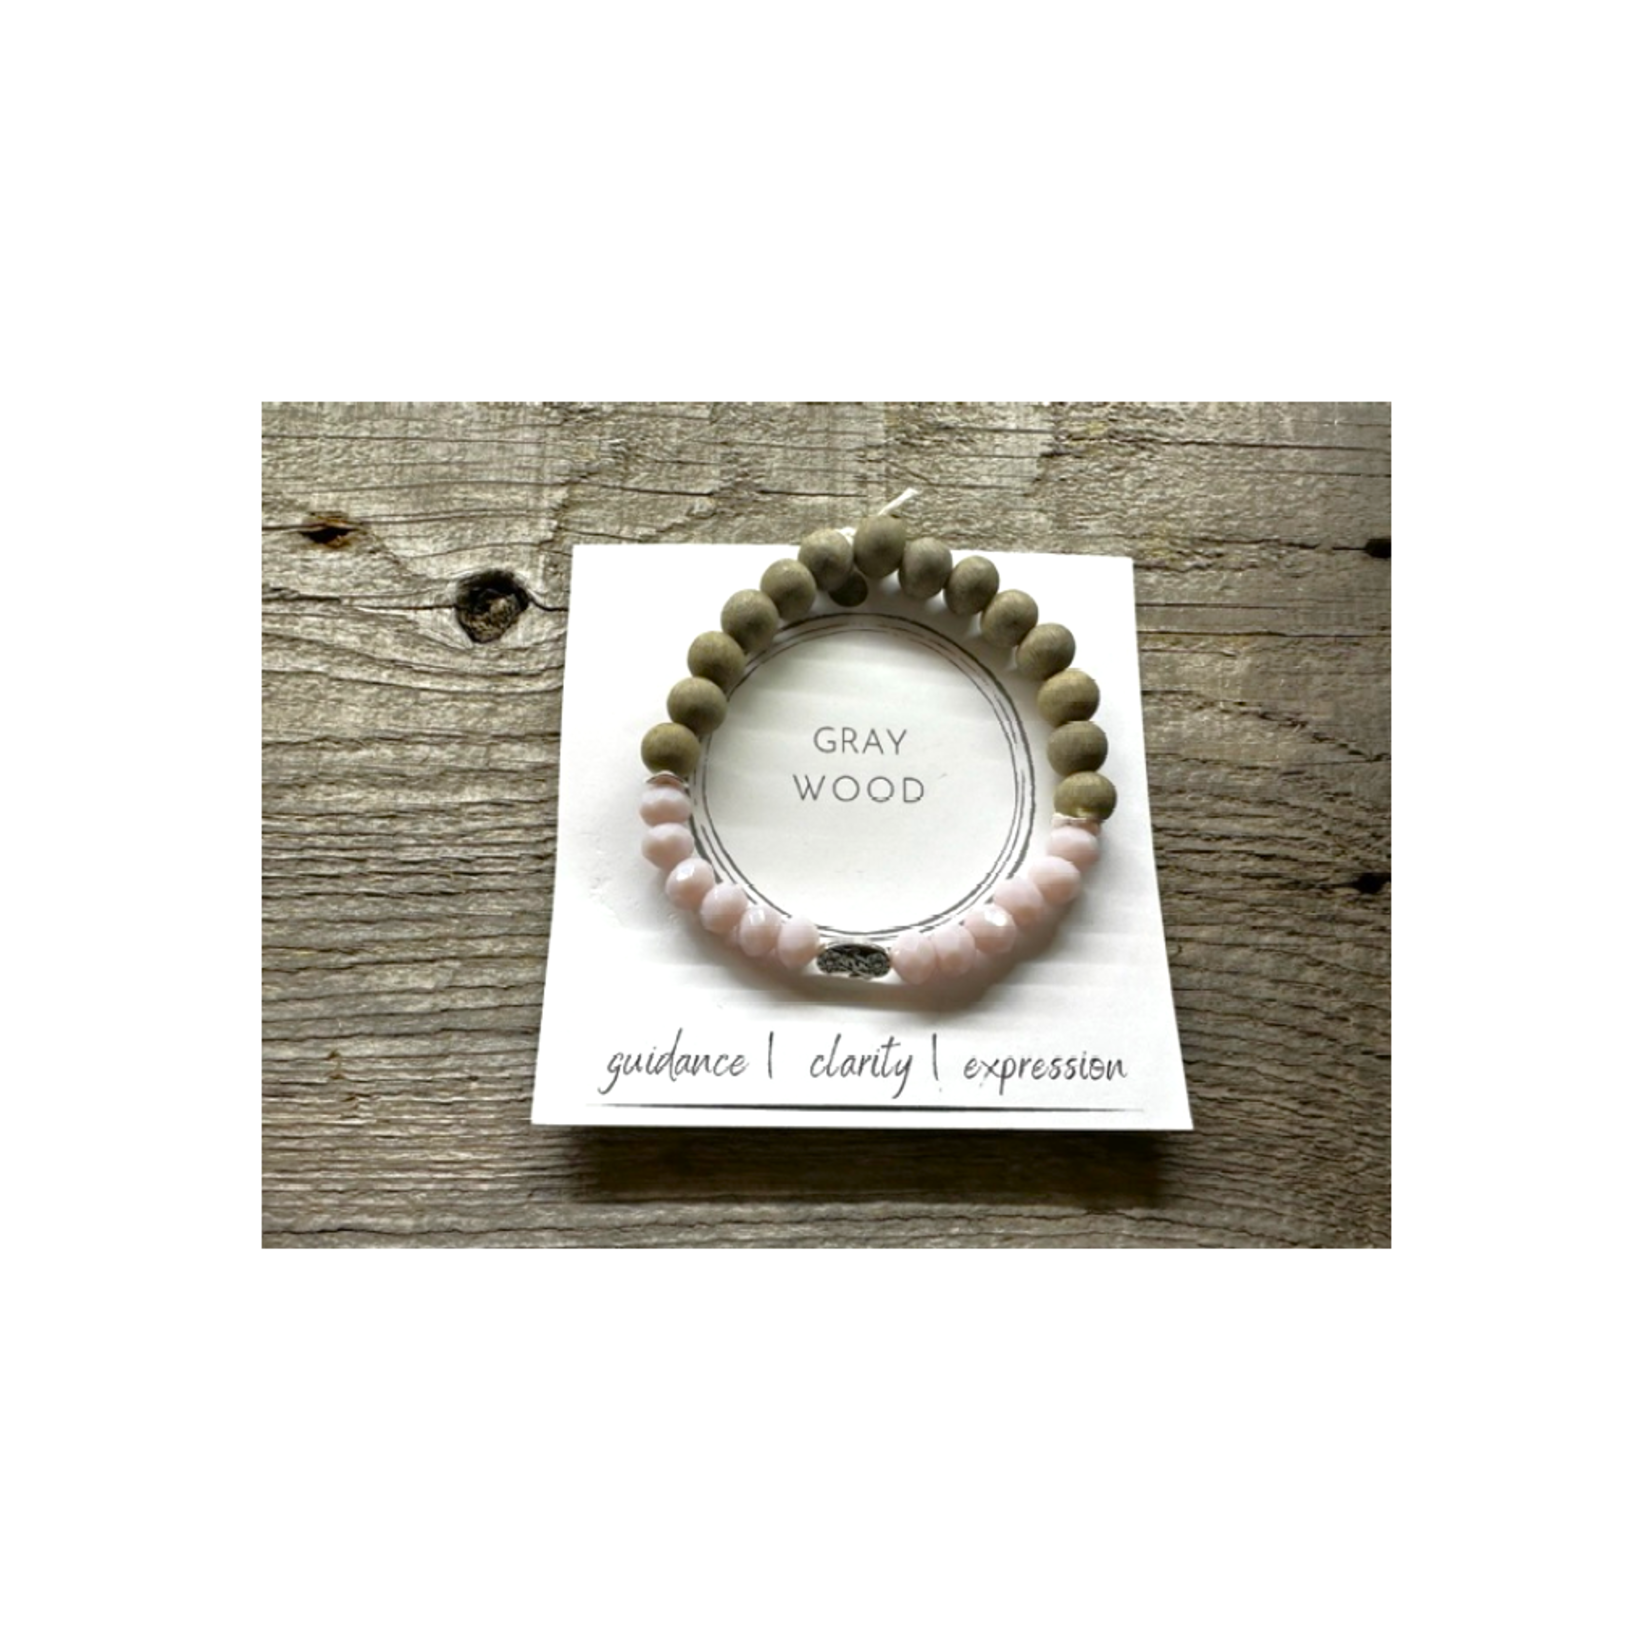 Wood Diffuser Bracelet - Gray Wood Pink Charm